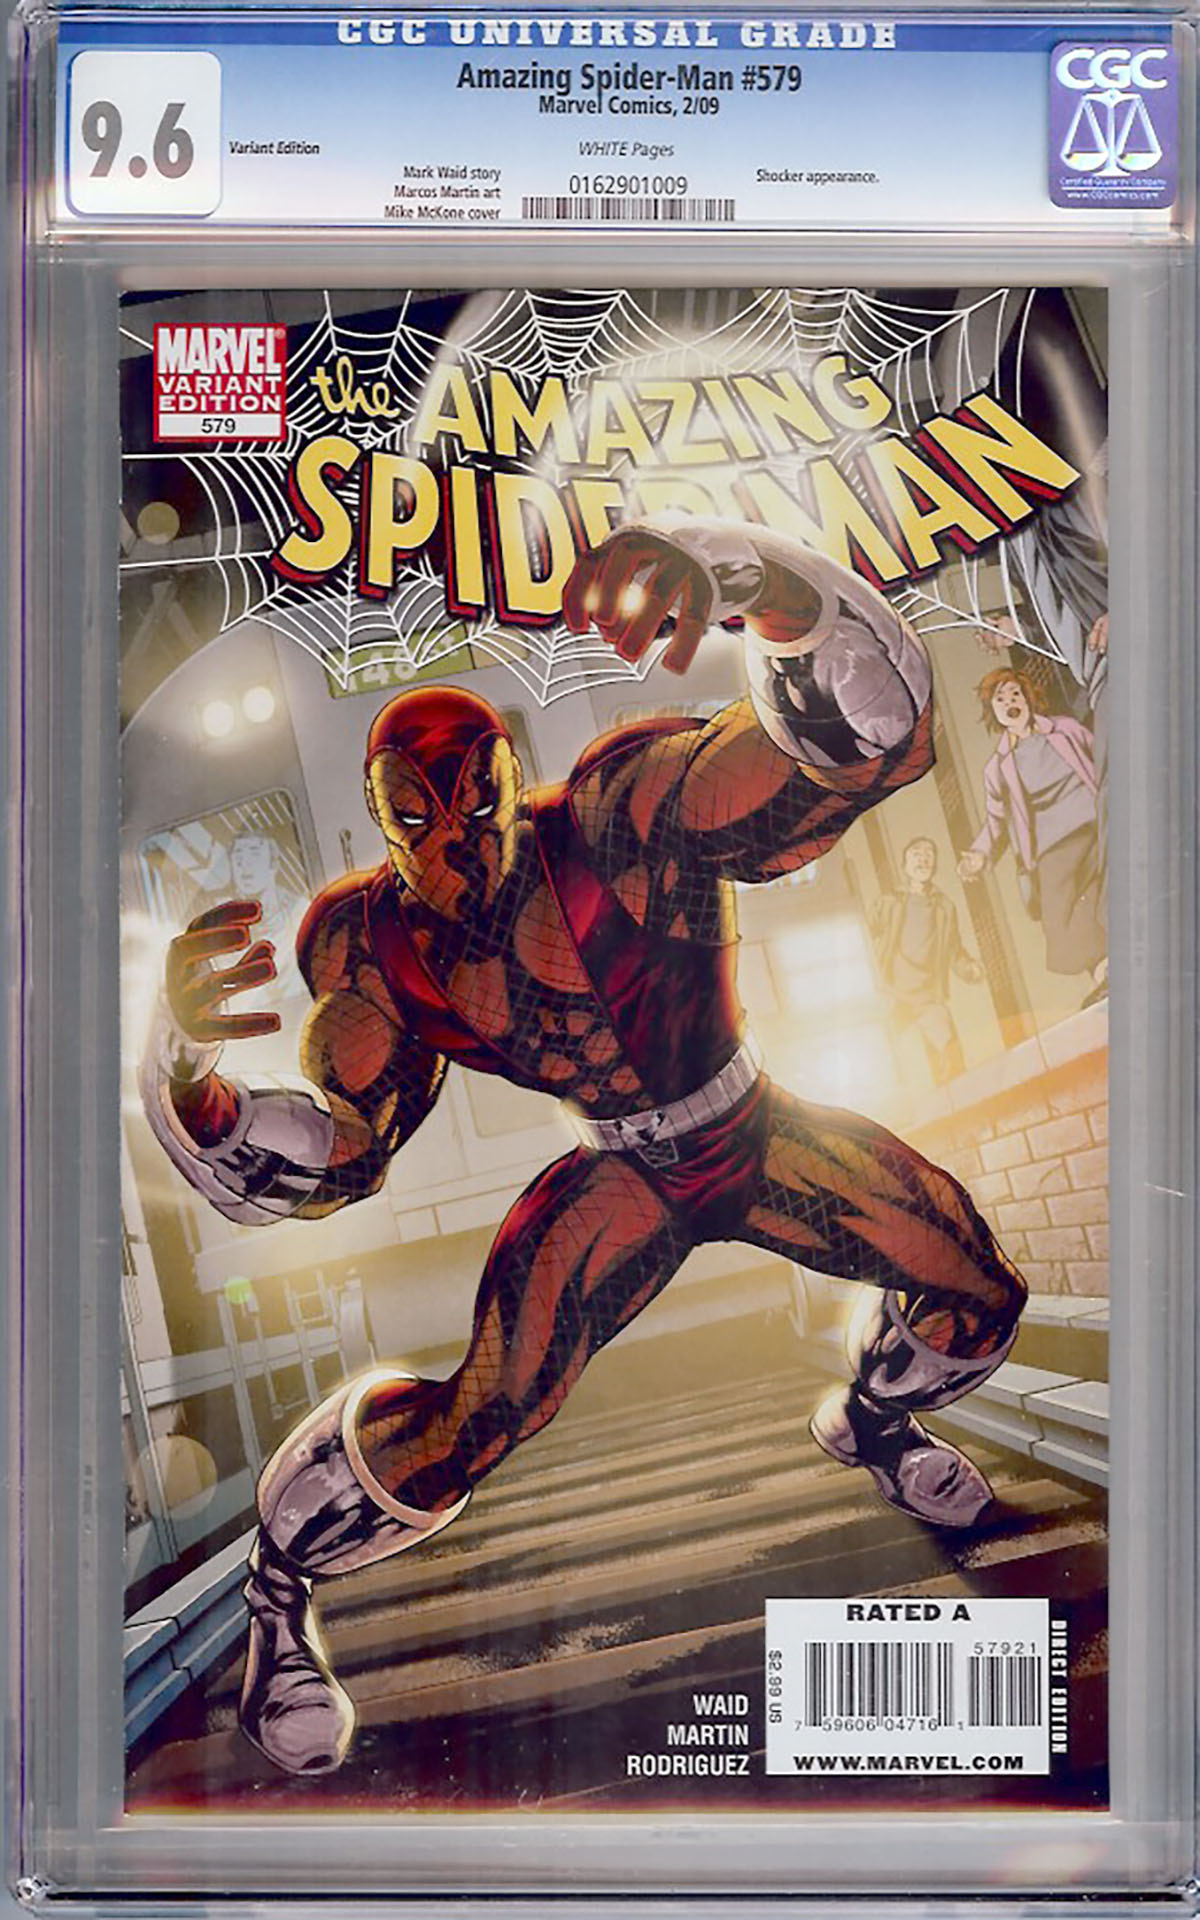 Amazing Spider-Man #579 CGC 9.6 w Variant Edition